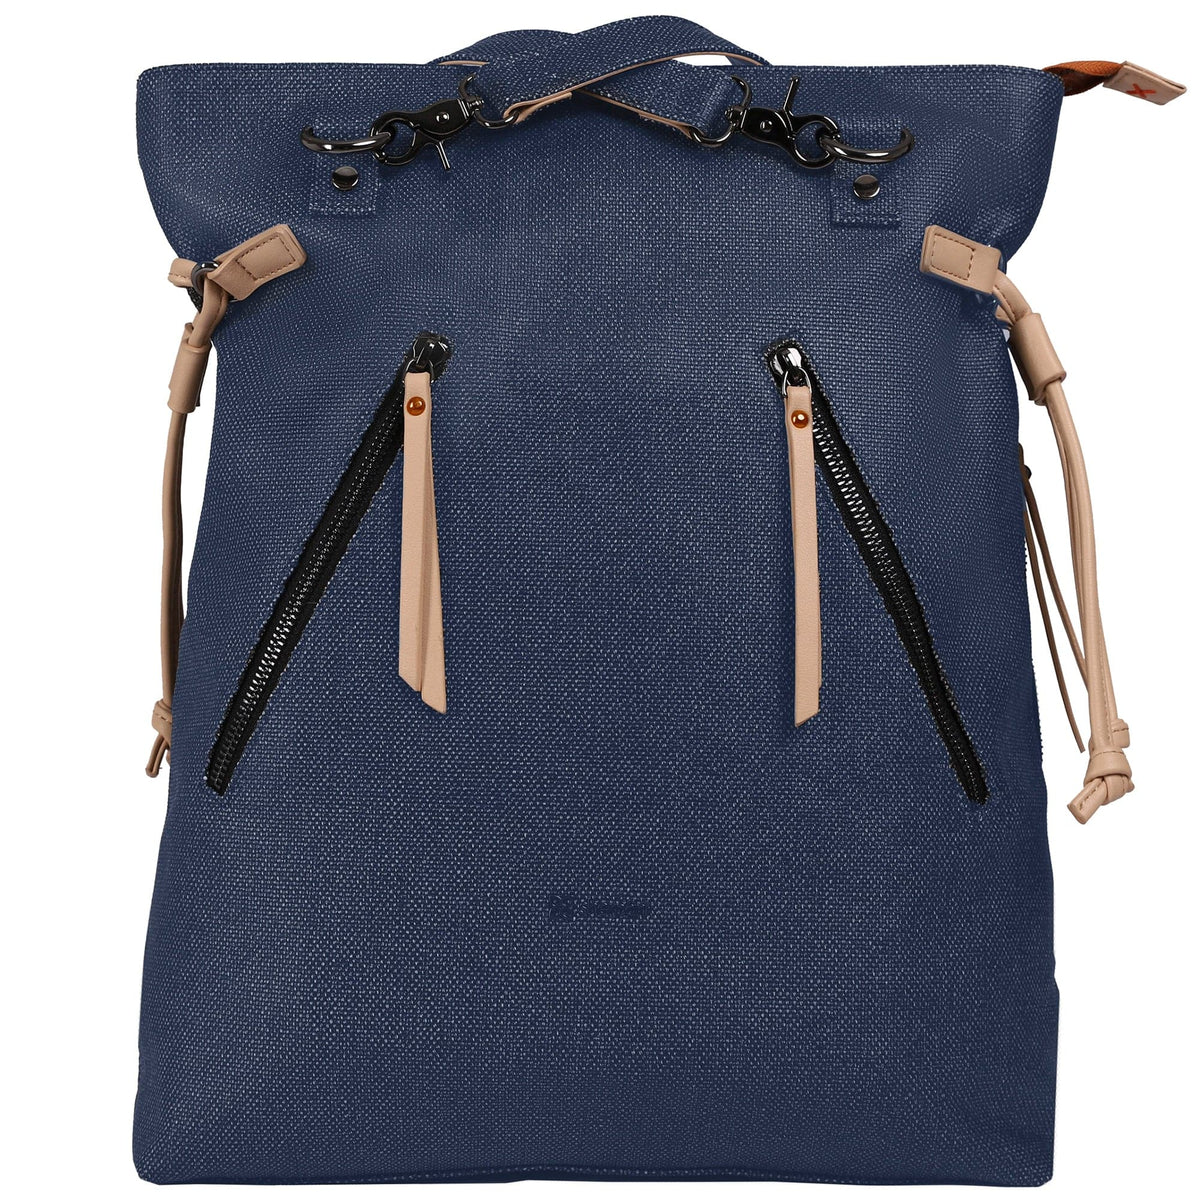 Sherpani American Ethos Tempest Tote Bag/Backpack